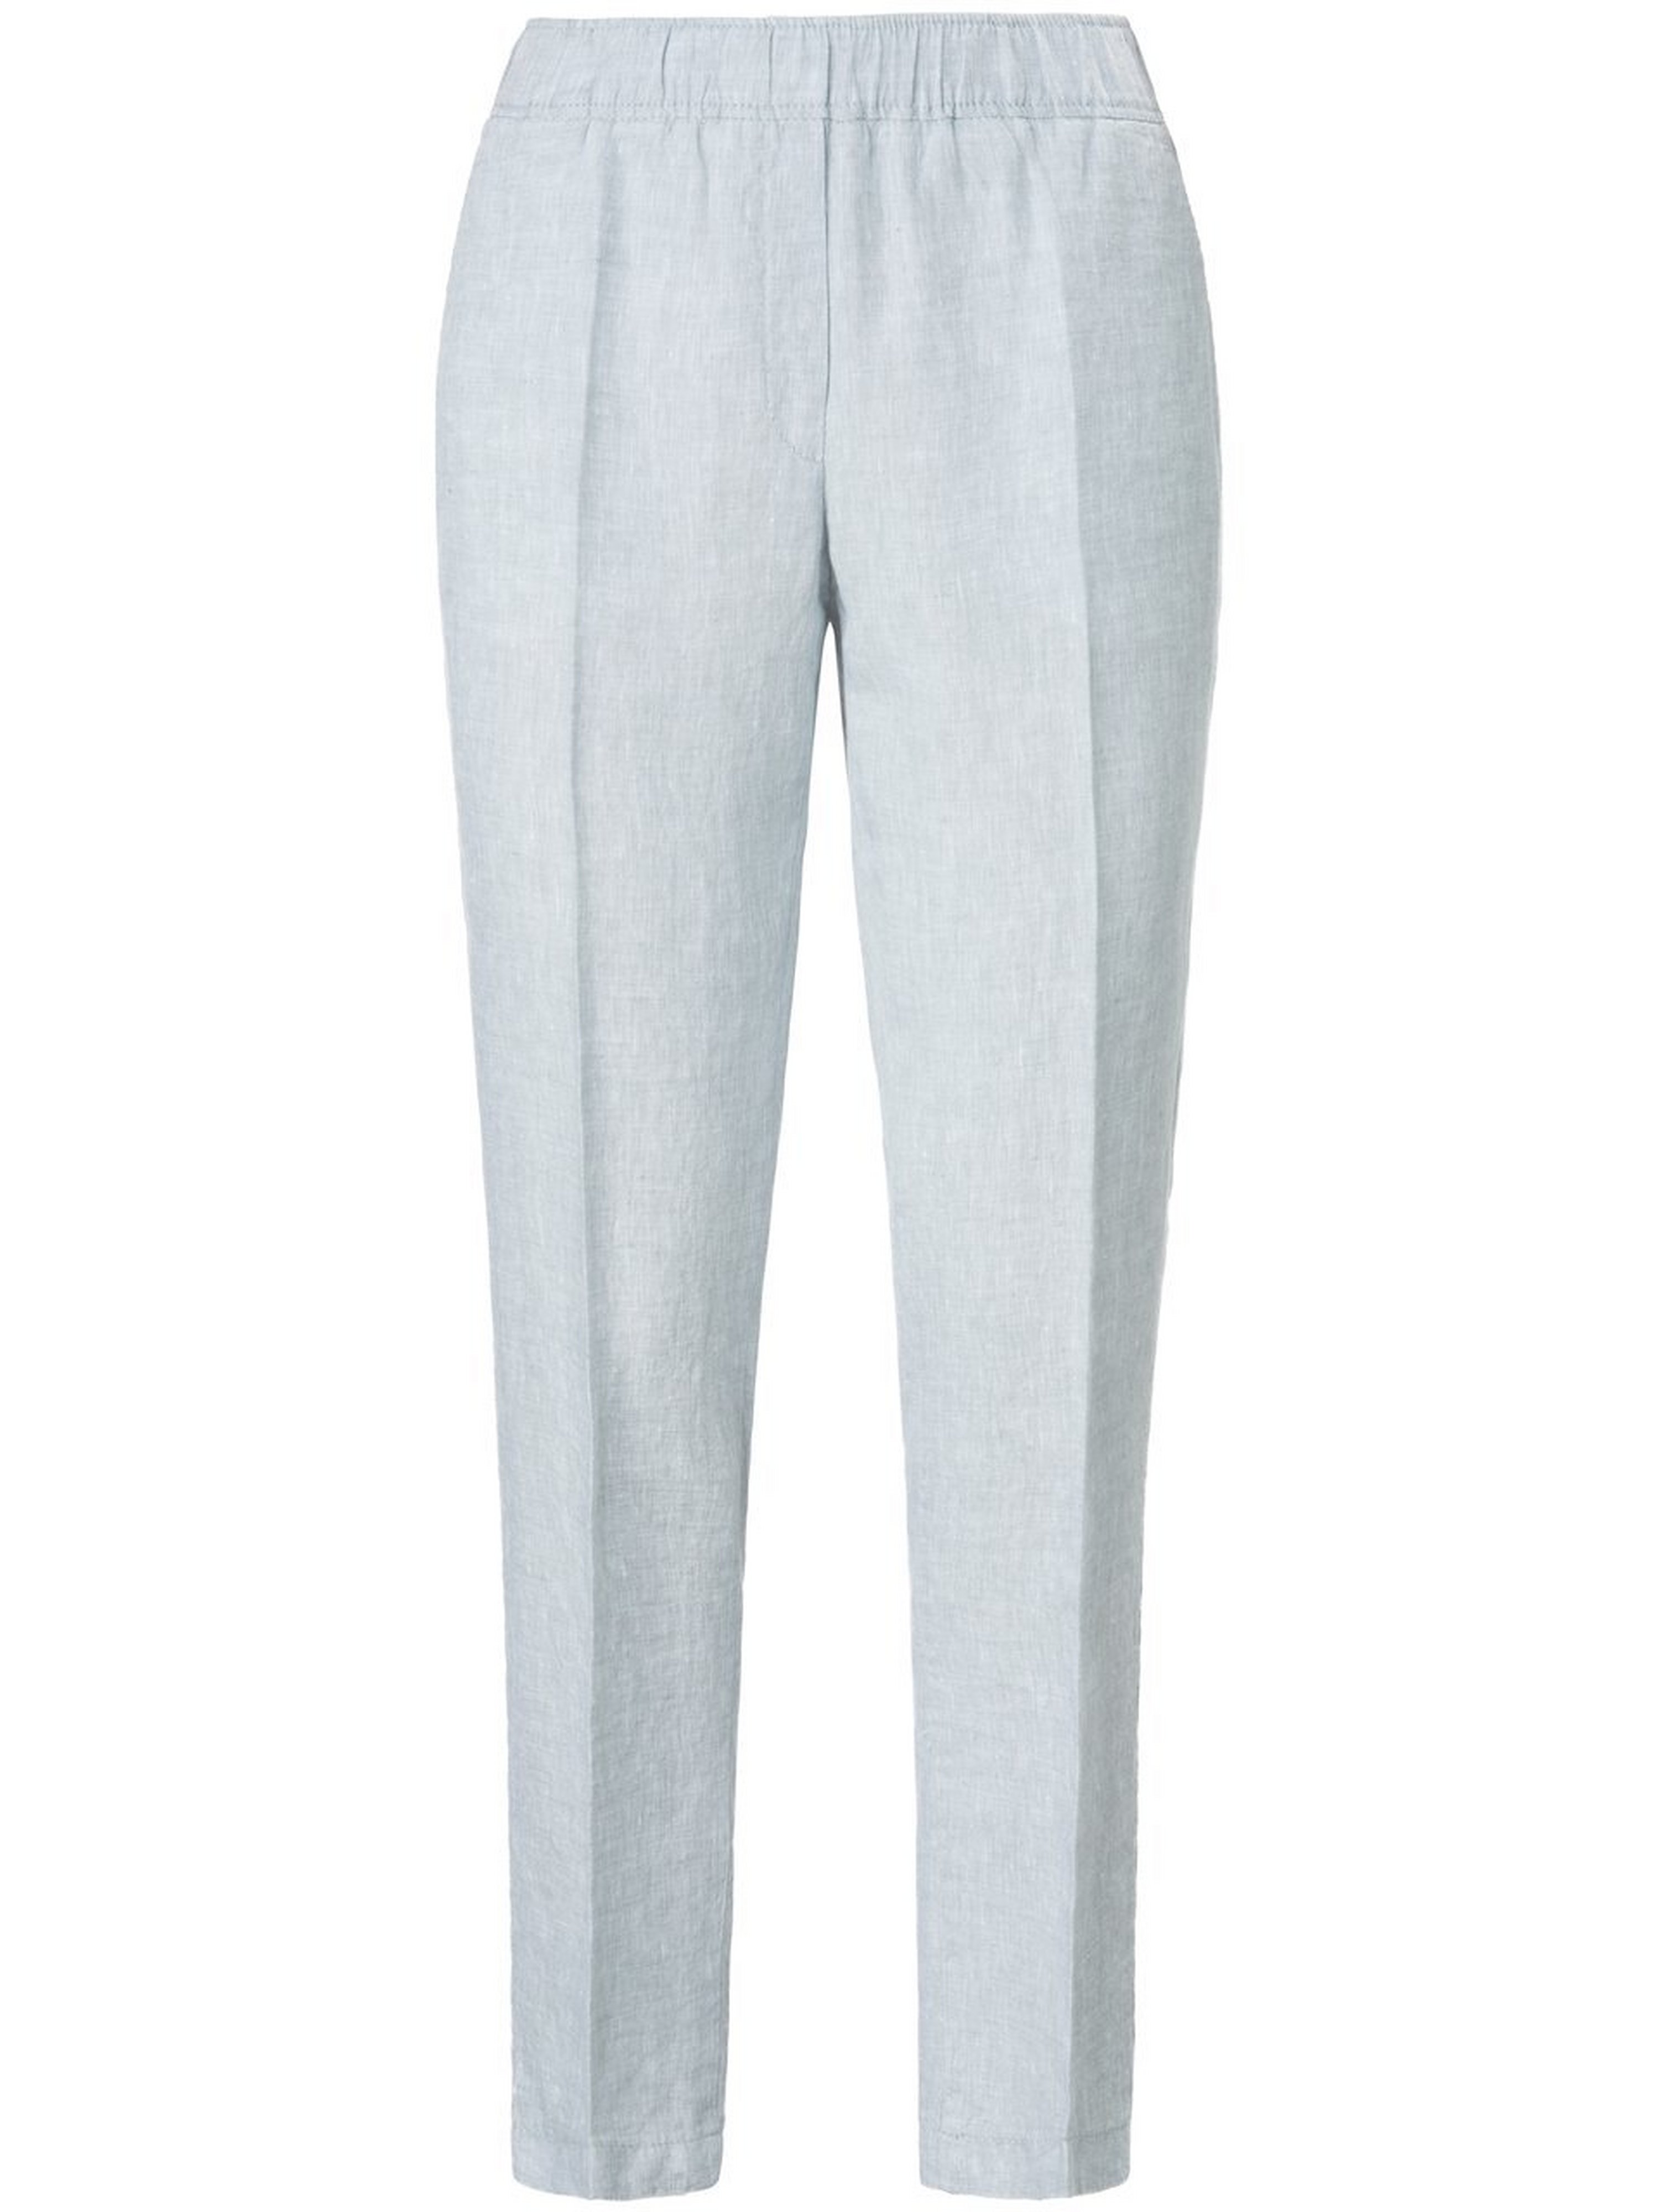 Le pantalon modern fit model Maron  Brax Feel Good gris